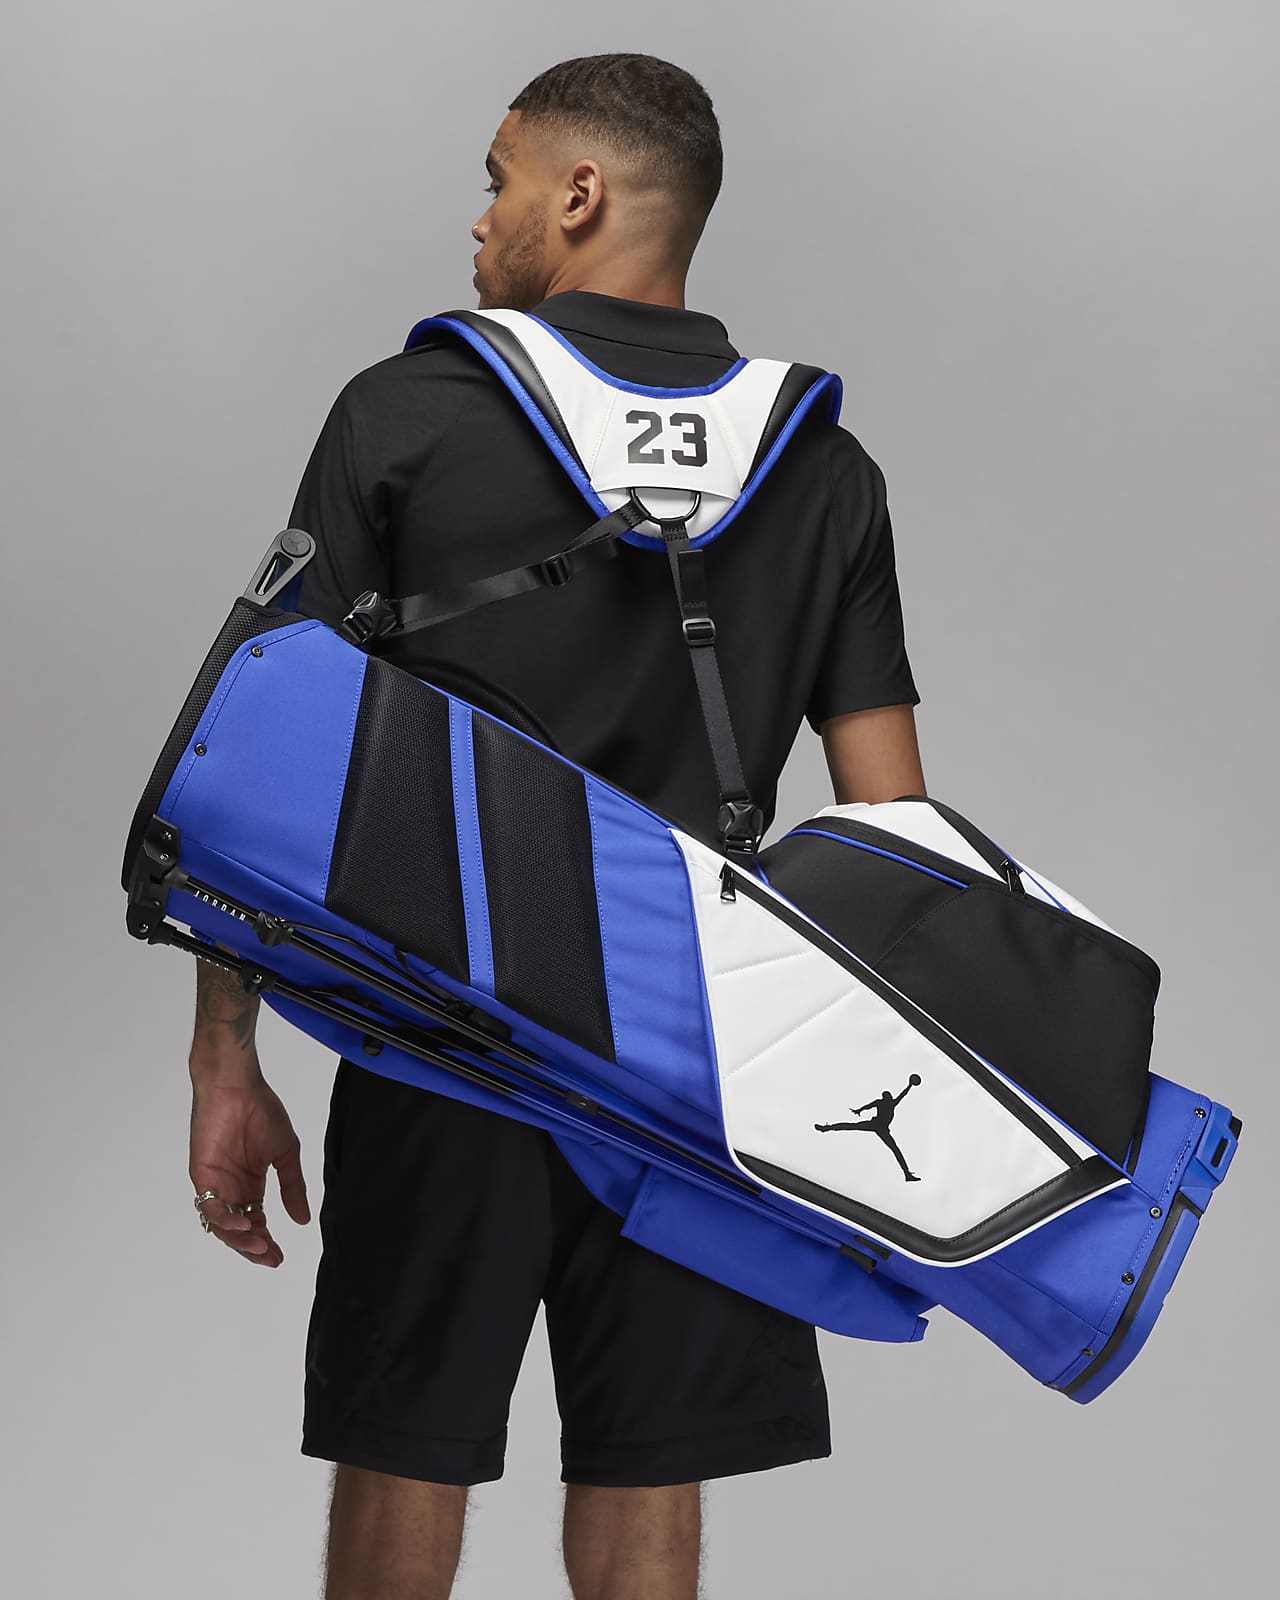 Jordan/Nike Basketball - Carrier Classic Collection